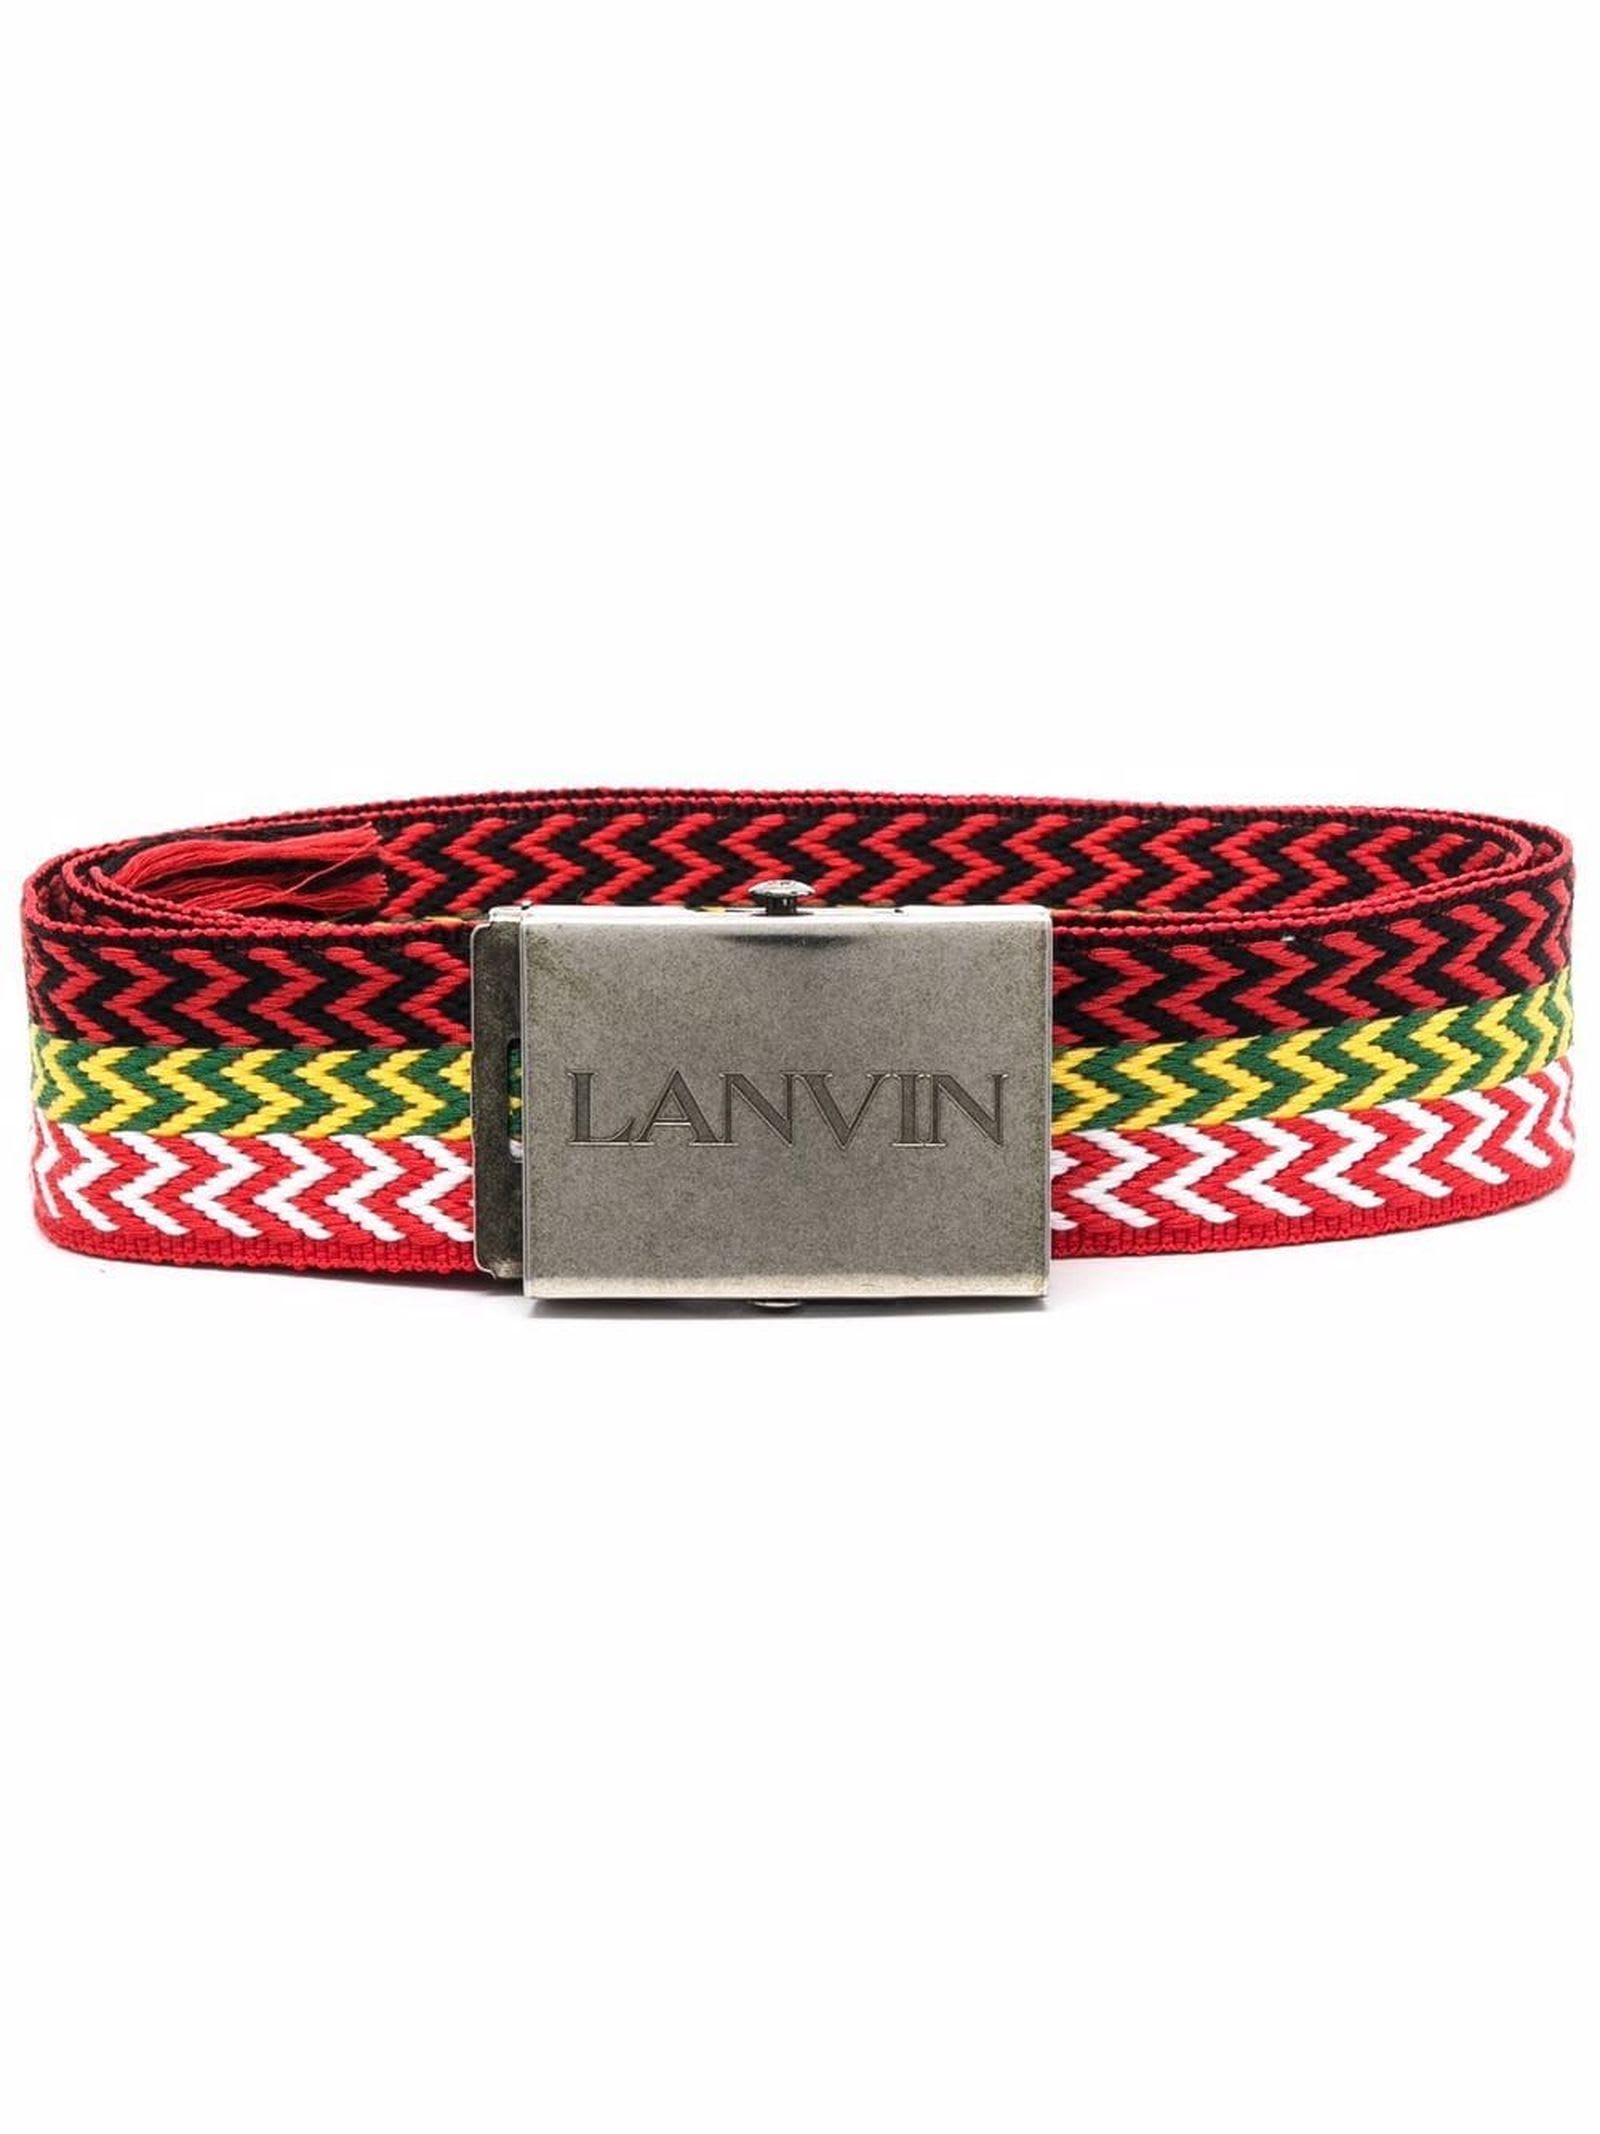 Lanvin Multicolour Chevron Print Belt